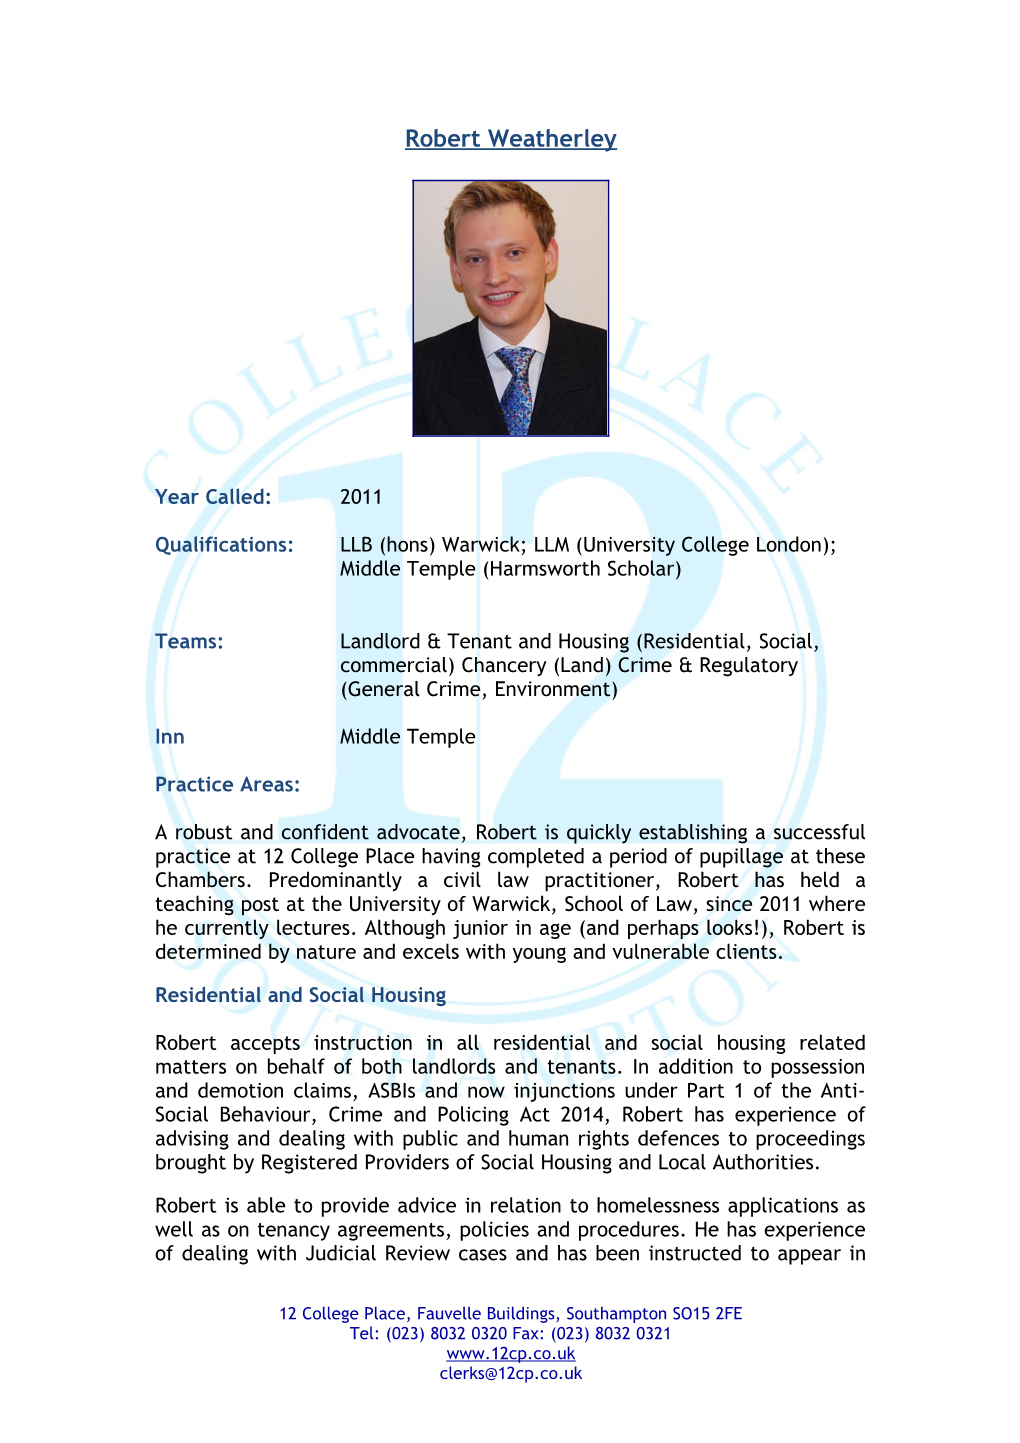 Qualifications:LLB (Hons) Warwick; LLM (University College London);